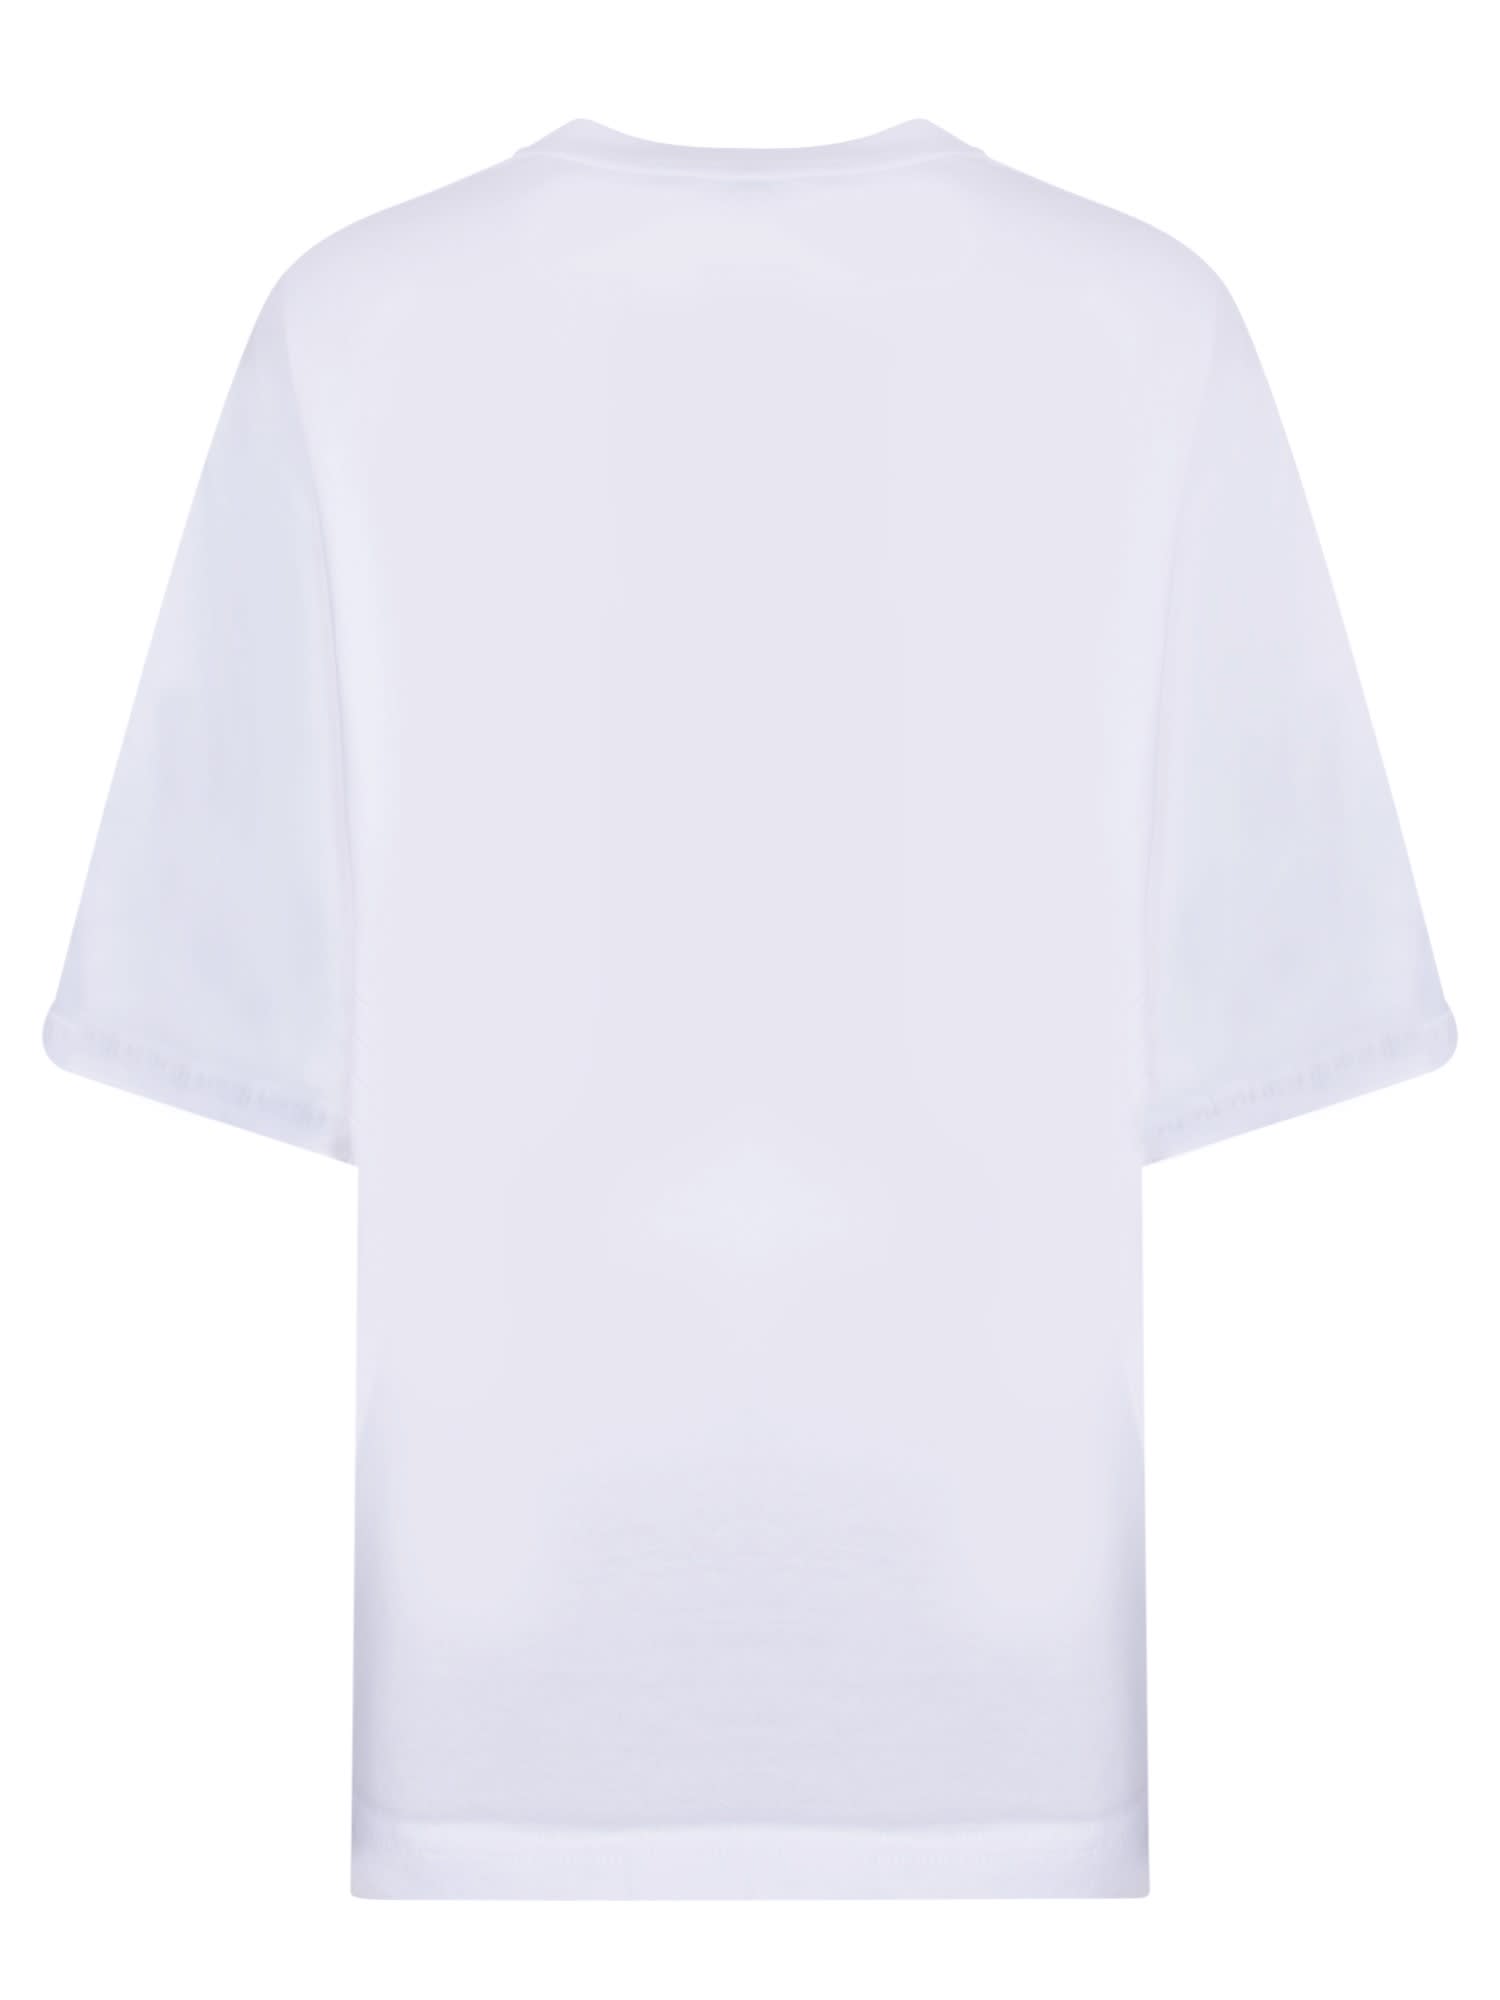 Shop Dolce & Gabbana Lettering Logo White T-shirt